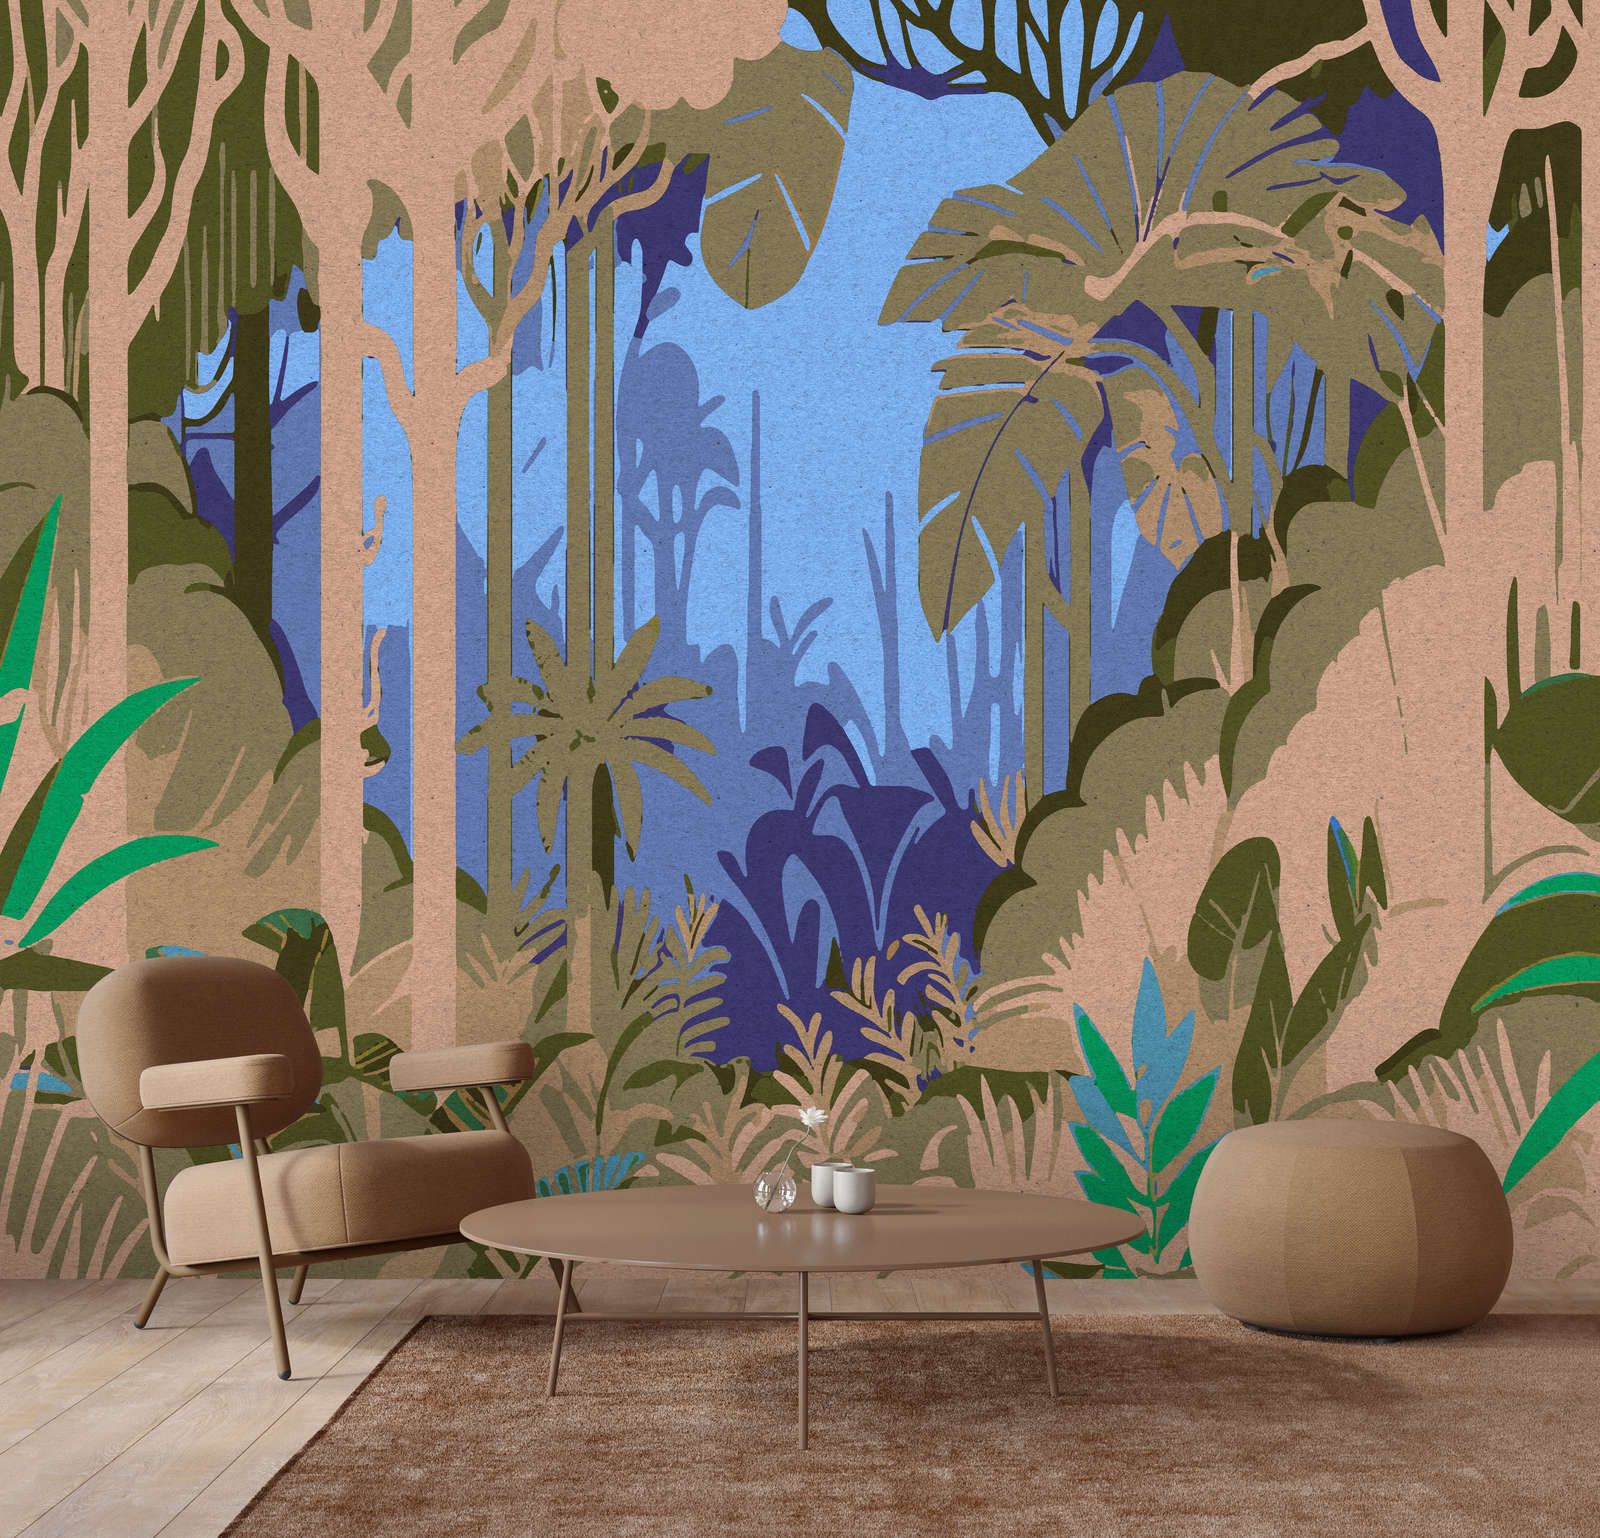             Digital behang »azura« - Abstract jungle-motief met kraftpapiertextuur - Gladde, licht parelmoerachtige vliesstof
        